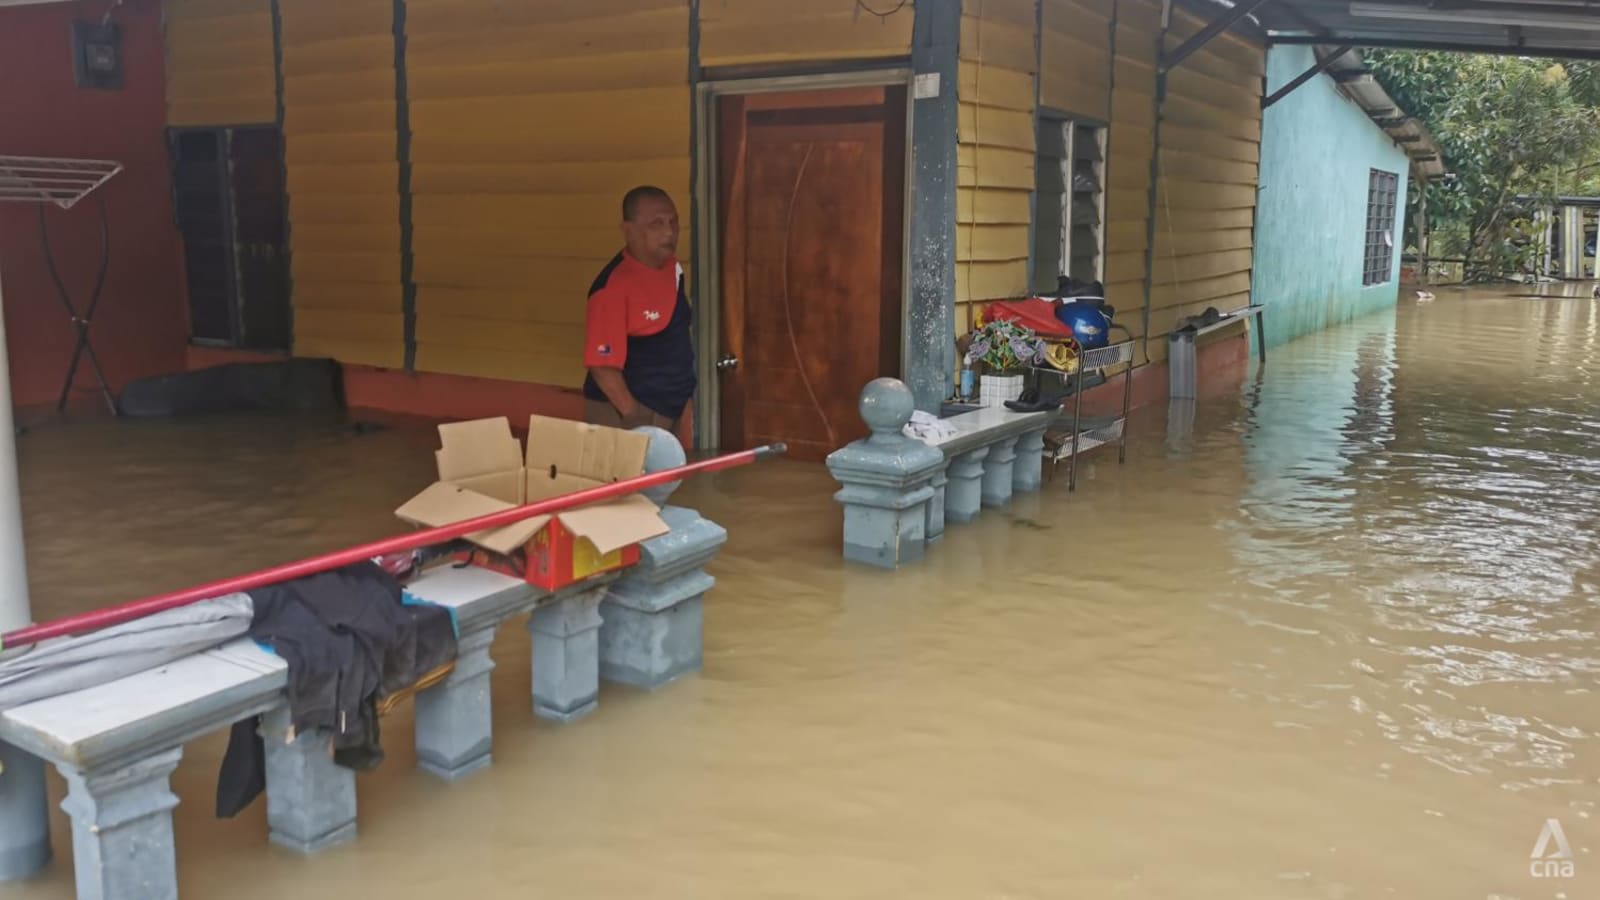 No need to declare flood emergency in Malaysia, says DPM Ahmad Zahid